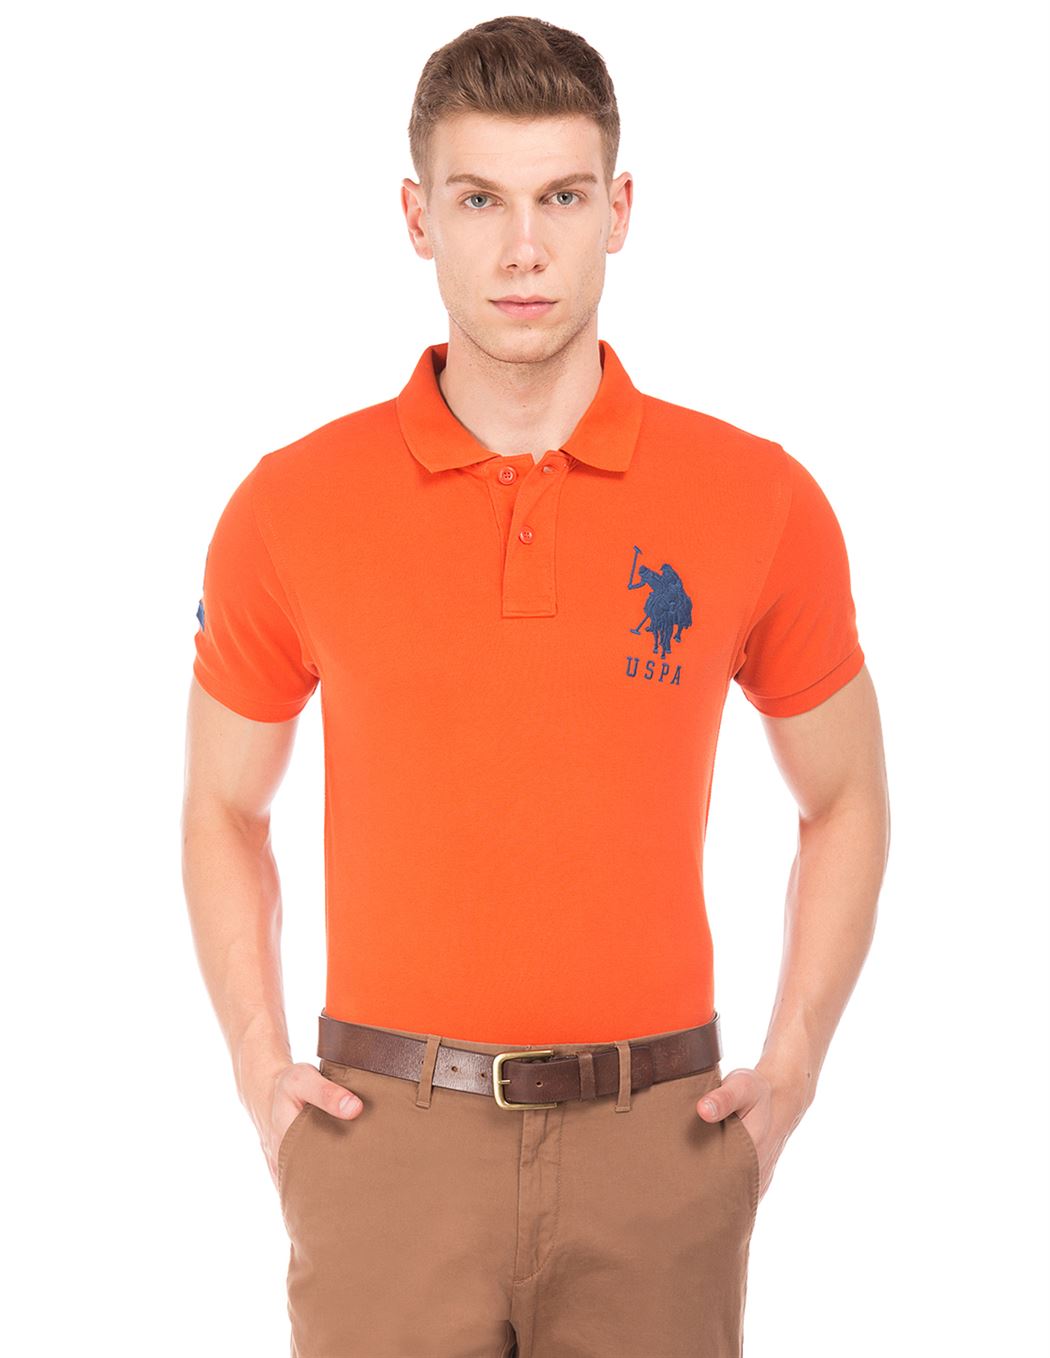 orange polo shirt for men